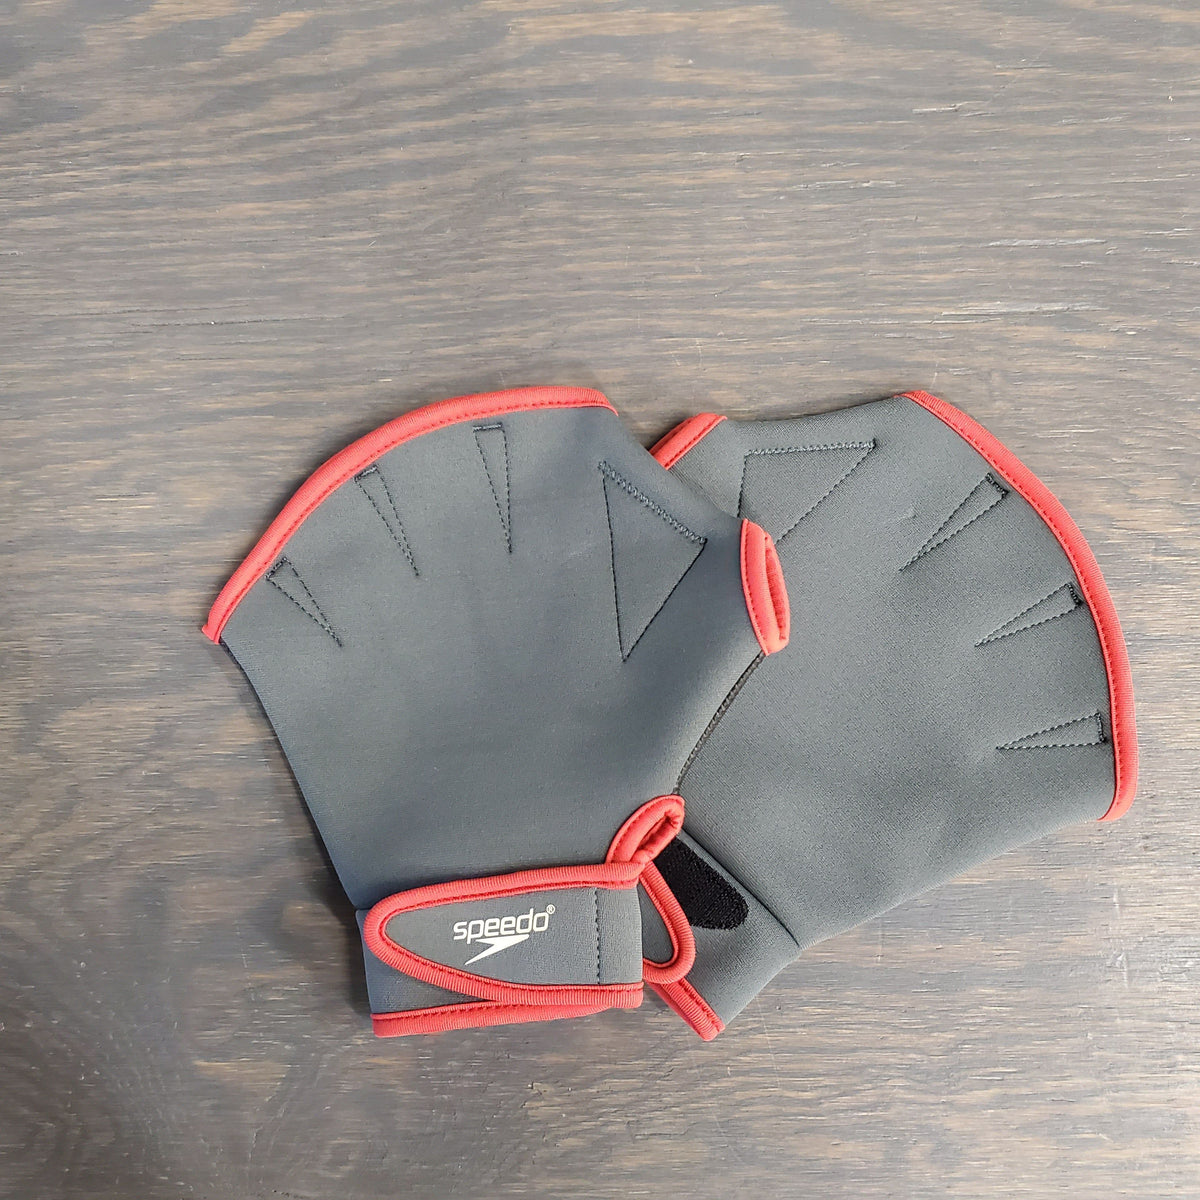 Speedo Aqua Fit Training Swim Gloves - Charcoal/Red - Medium - Used - Acceptable